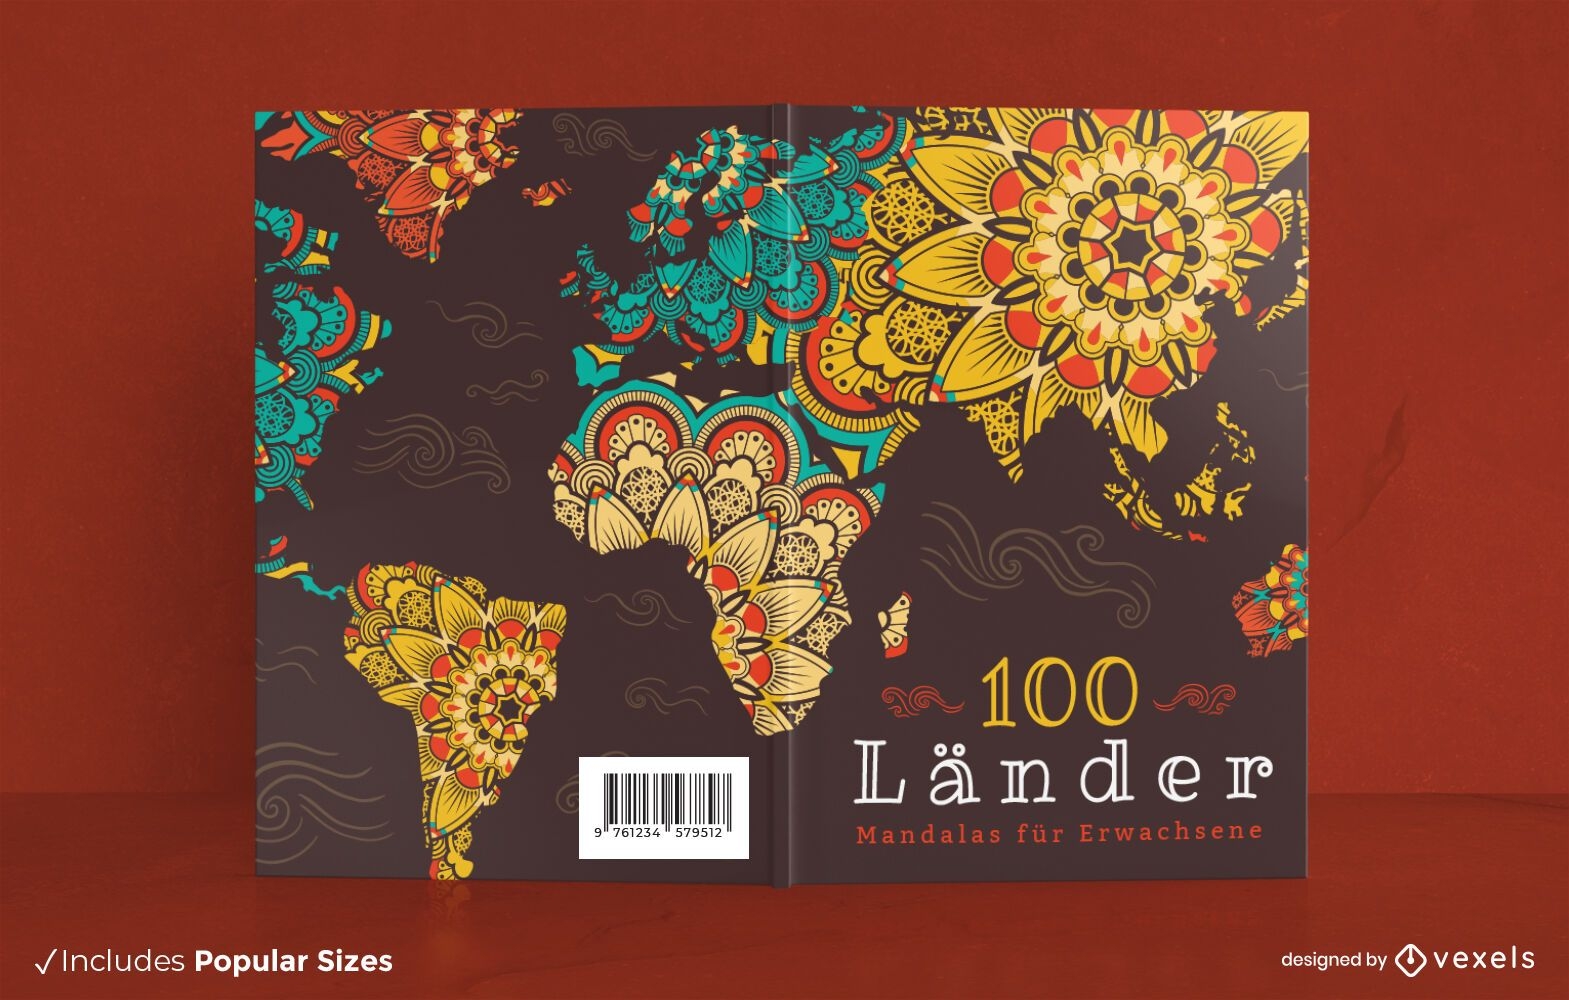 World map mandala floral book cover design